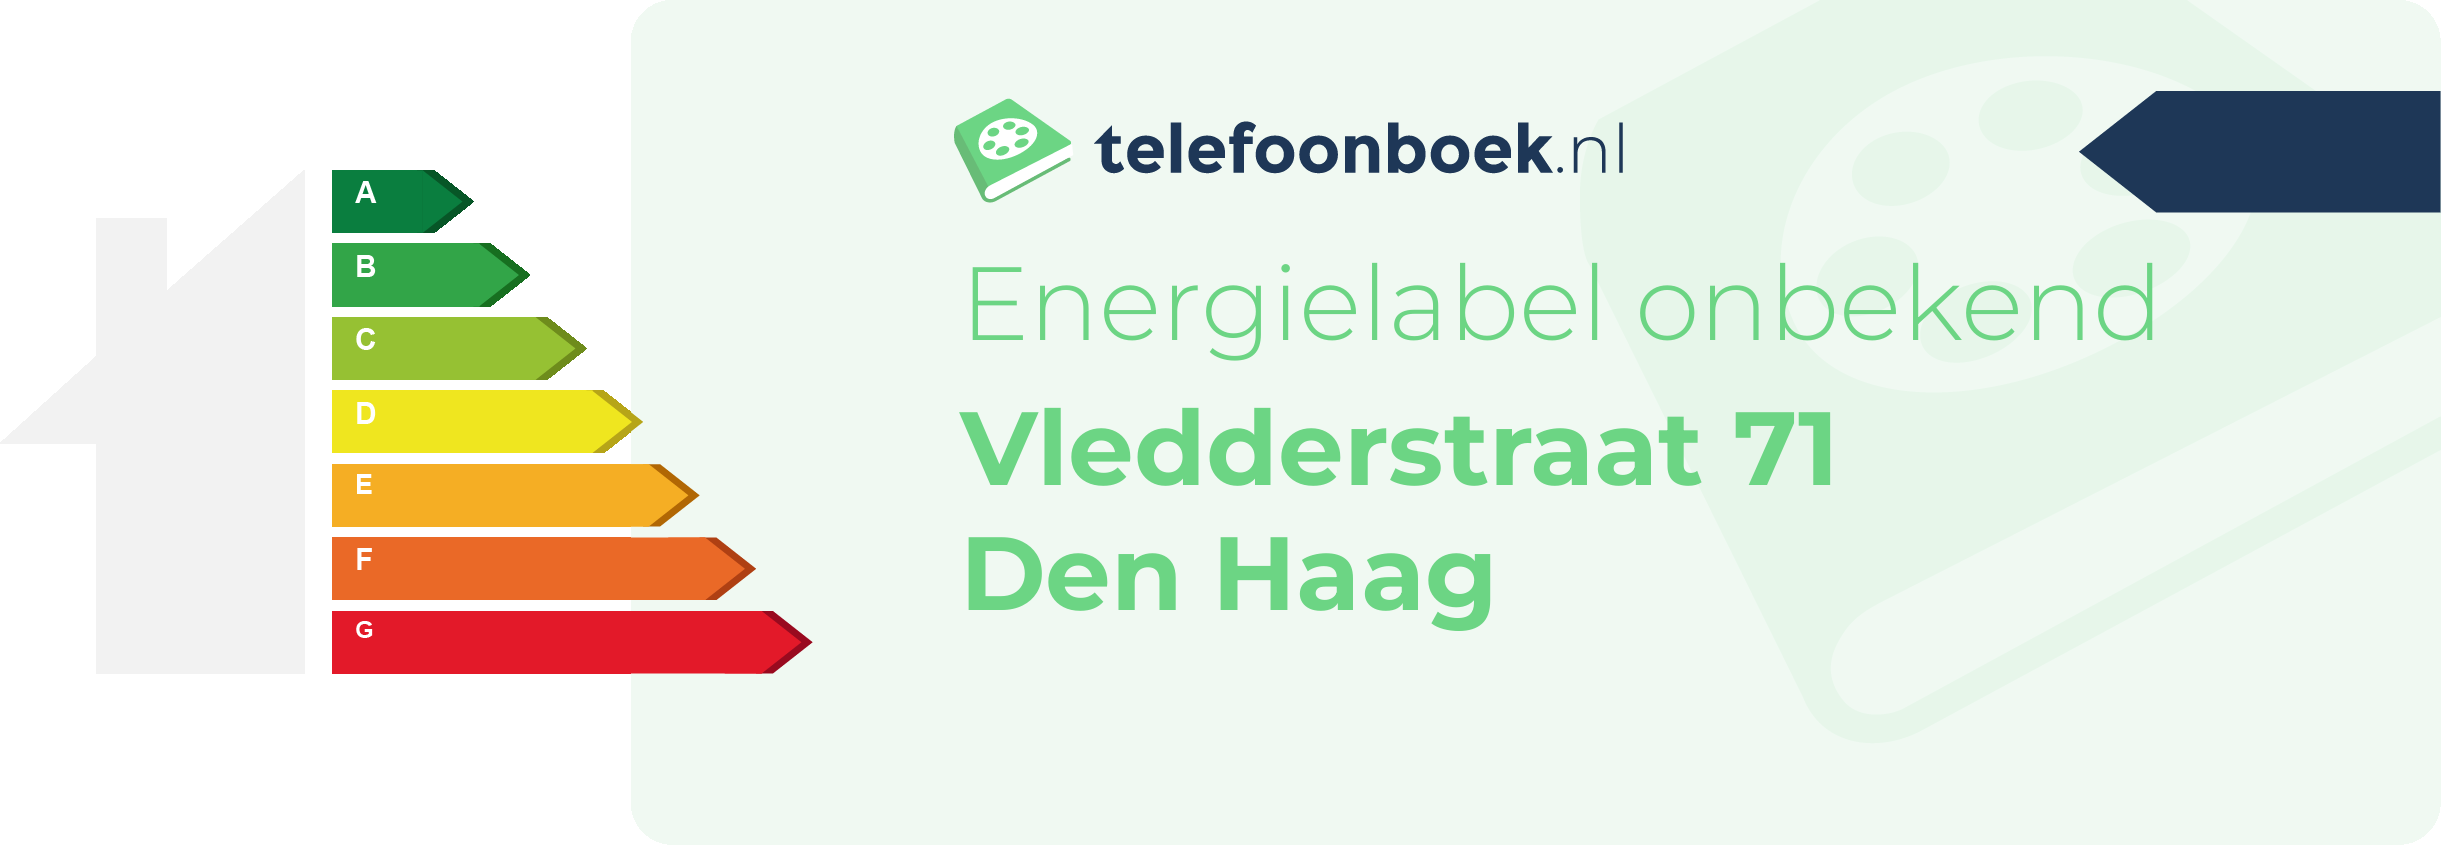 Energielabel Vledderstraat 71 Den Haag